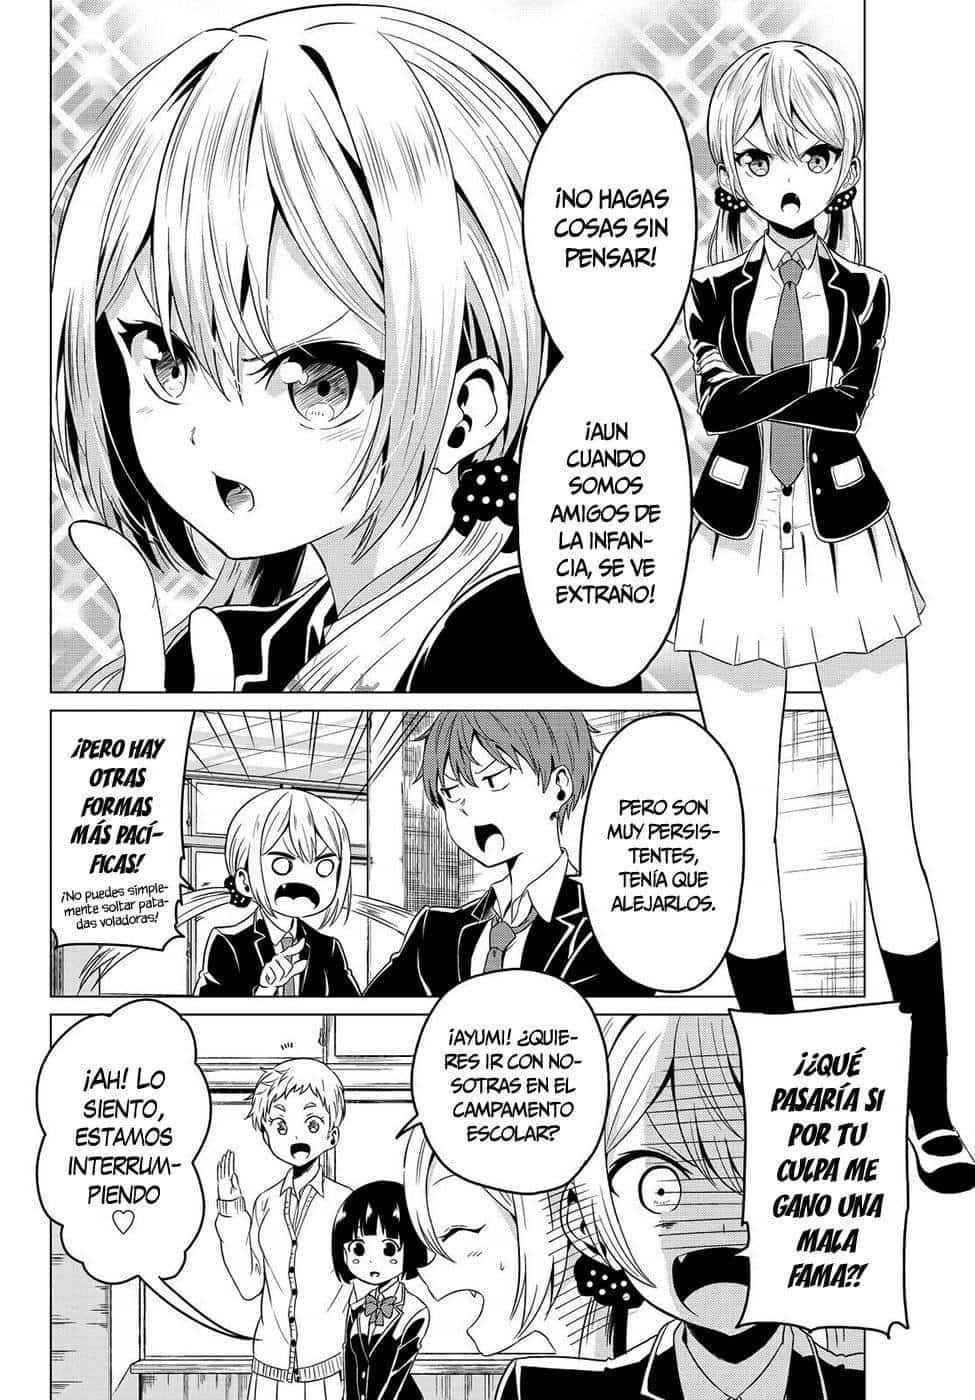 Descargar Sekai ka Kanojo ka Erabenai Manga PDF MEGA Imagen 2